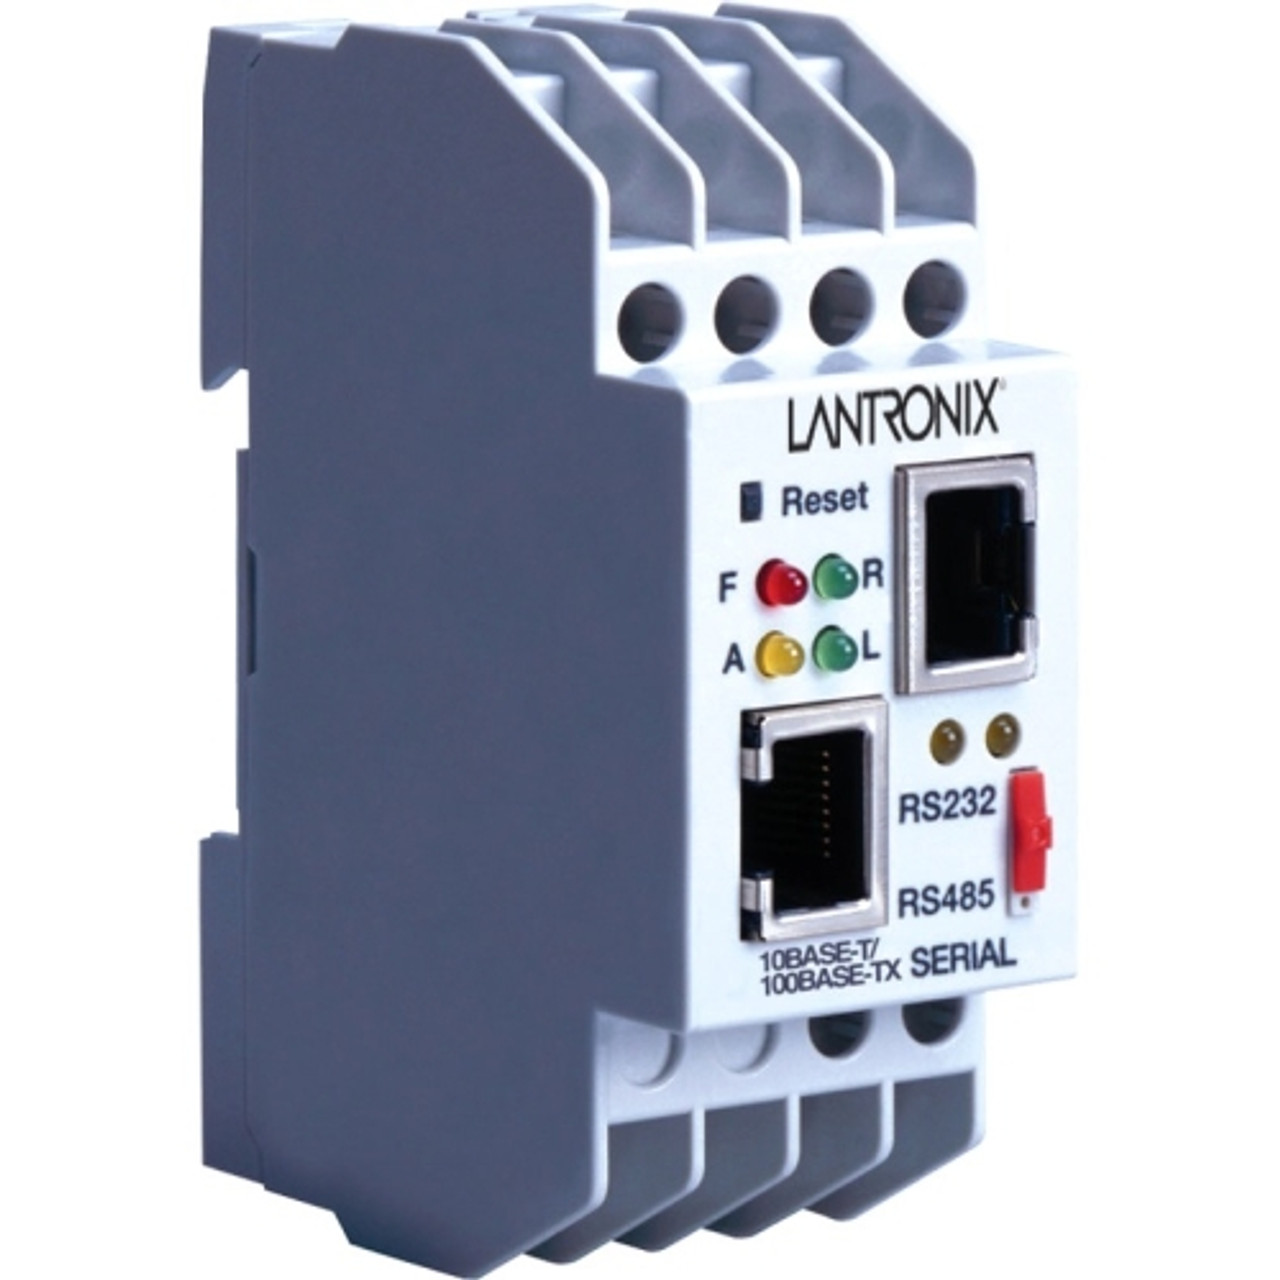 XSDRSN-03 Lantronix Xpress Dr Industrial Device Svr Serial Rohs